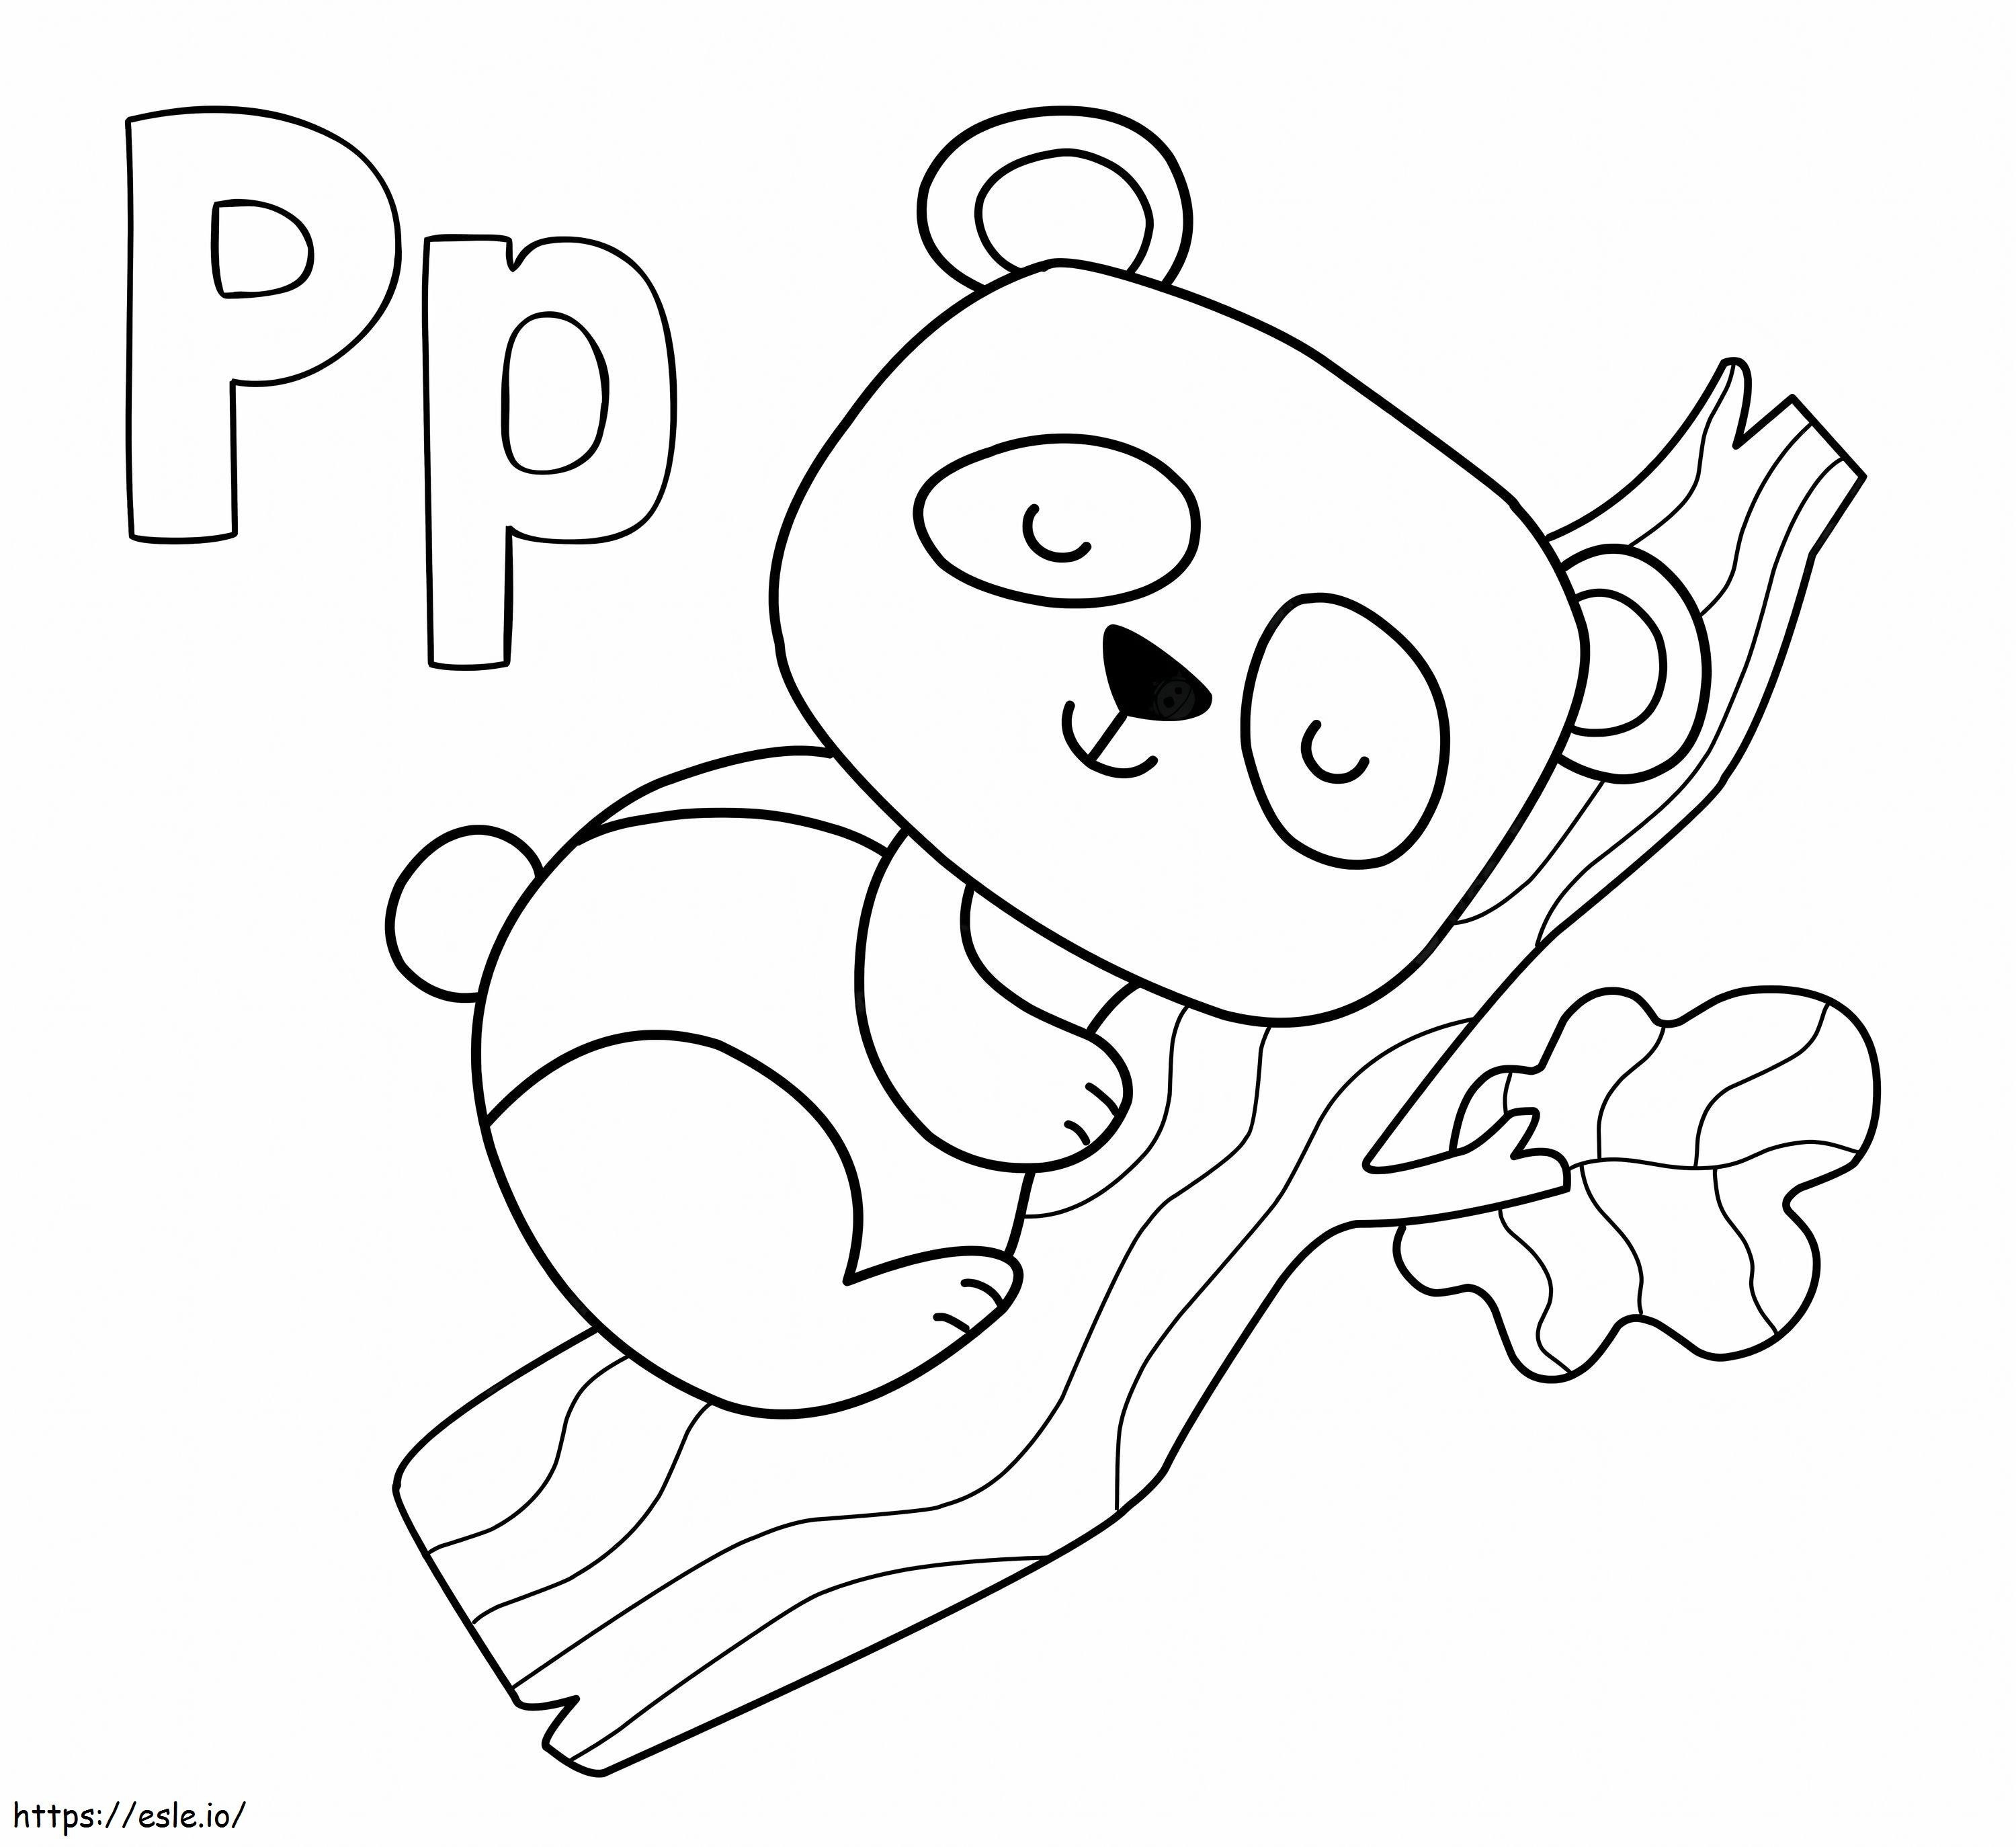 Letra P con Panda para colorear